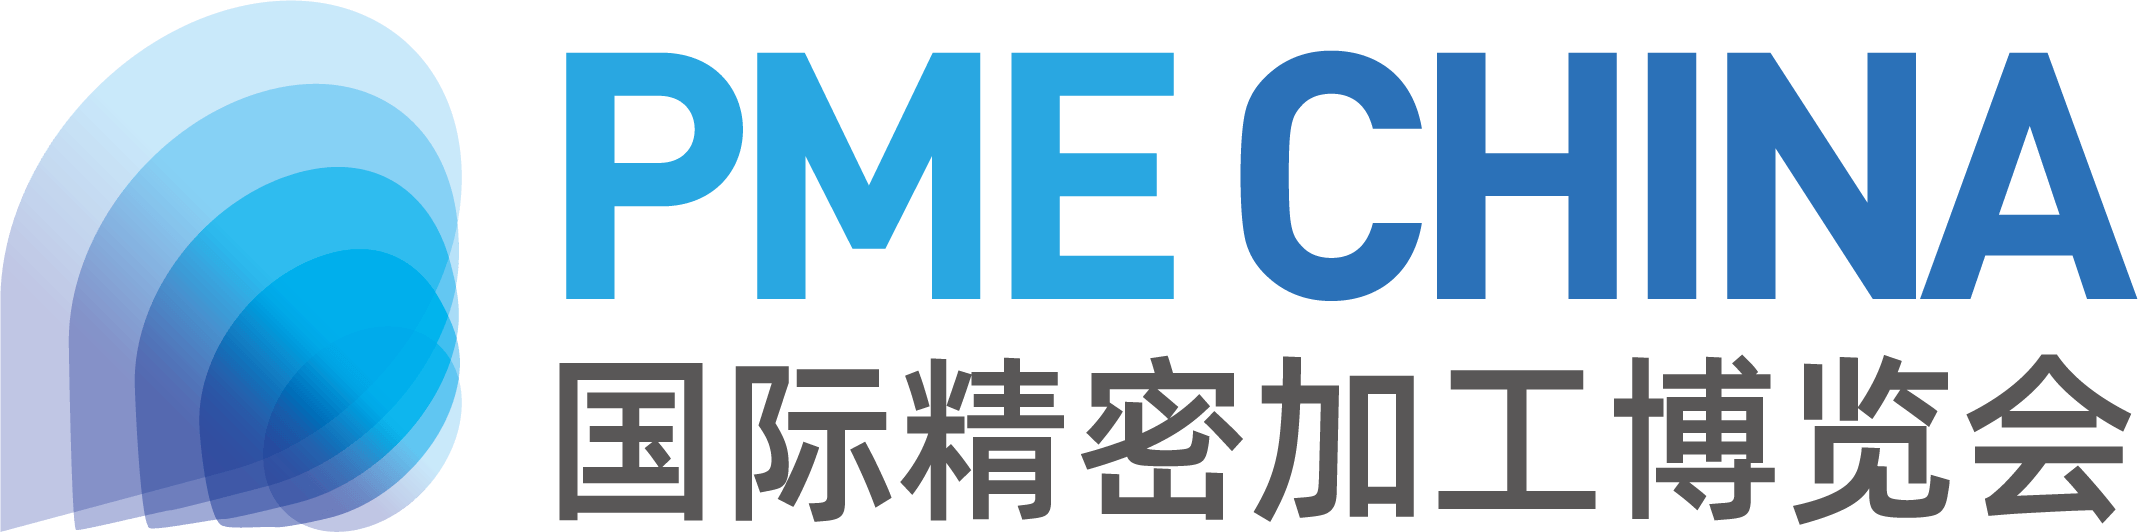 PME CHINA 国际精密加工博览会